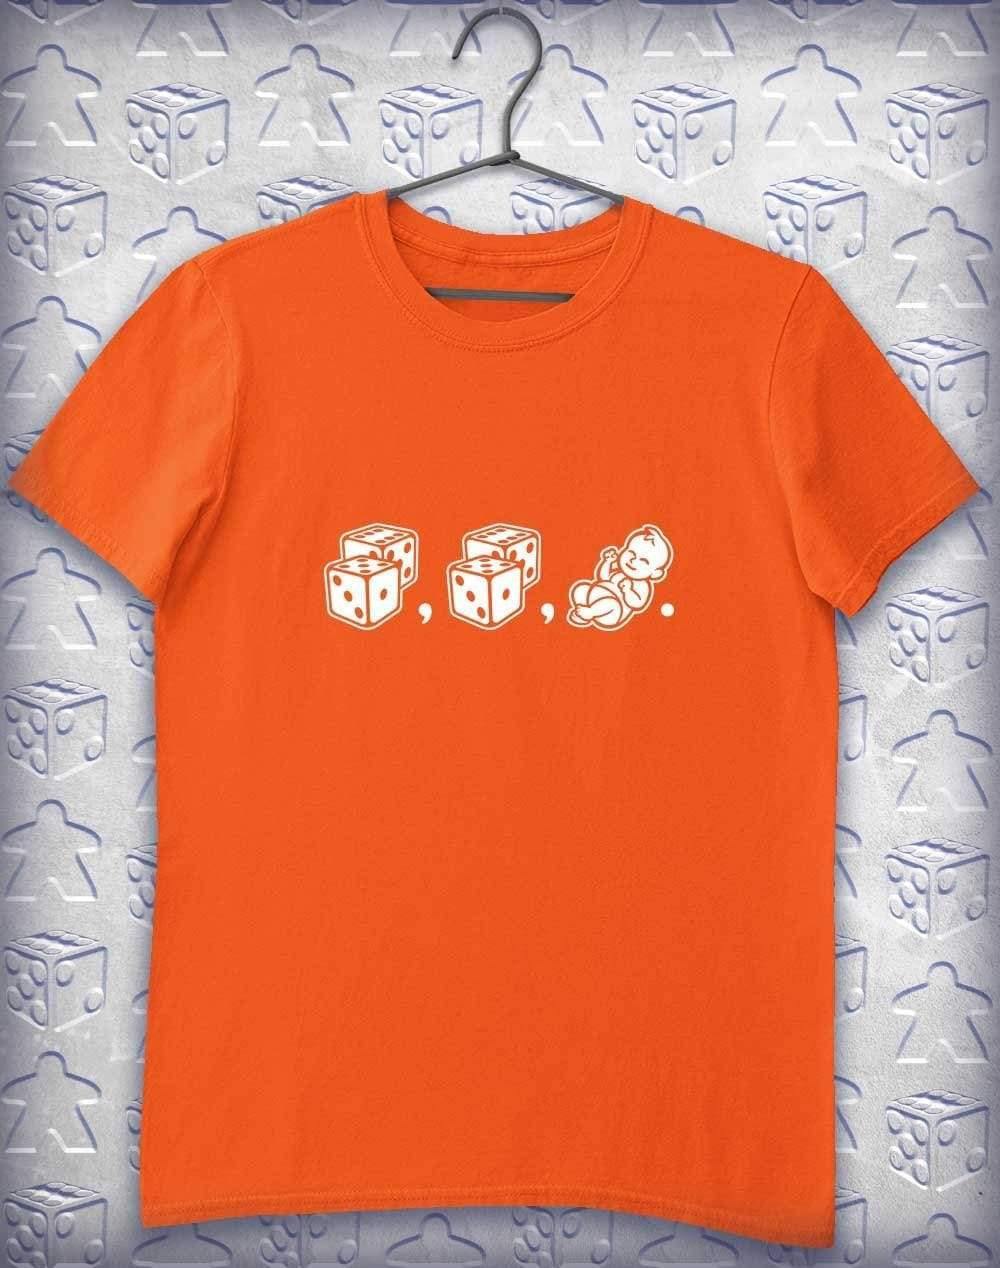 Dice Dice Baby (Plural) Alphagamer T-Shirt S / Orange  - Off World Tees